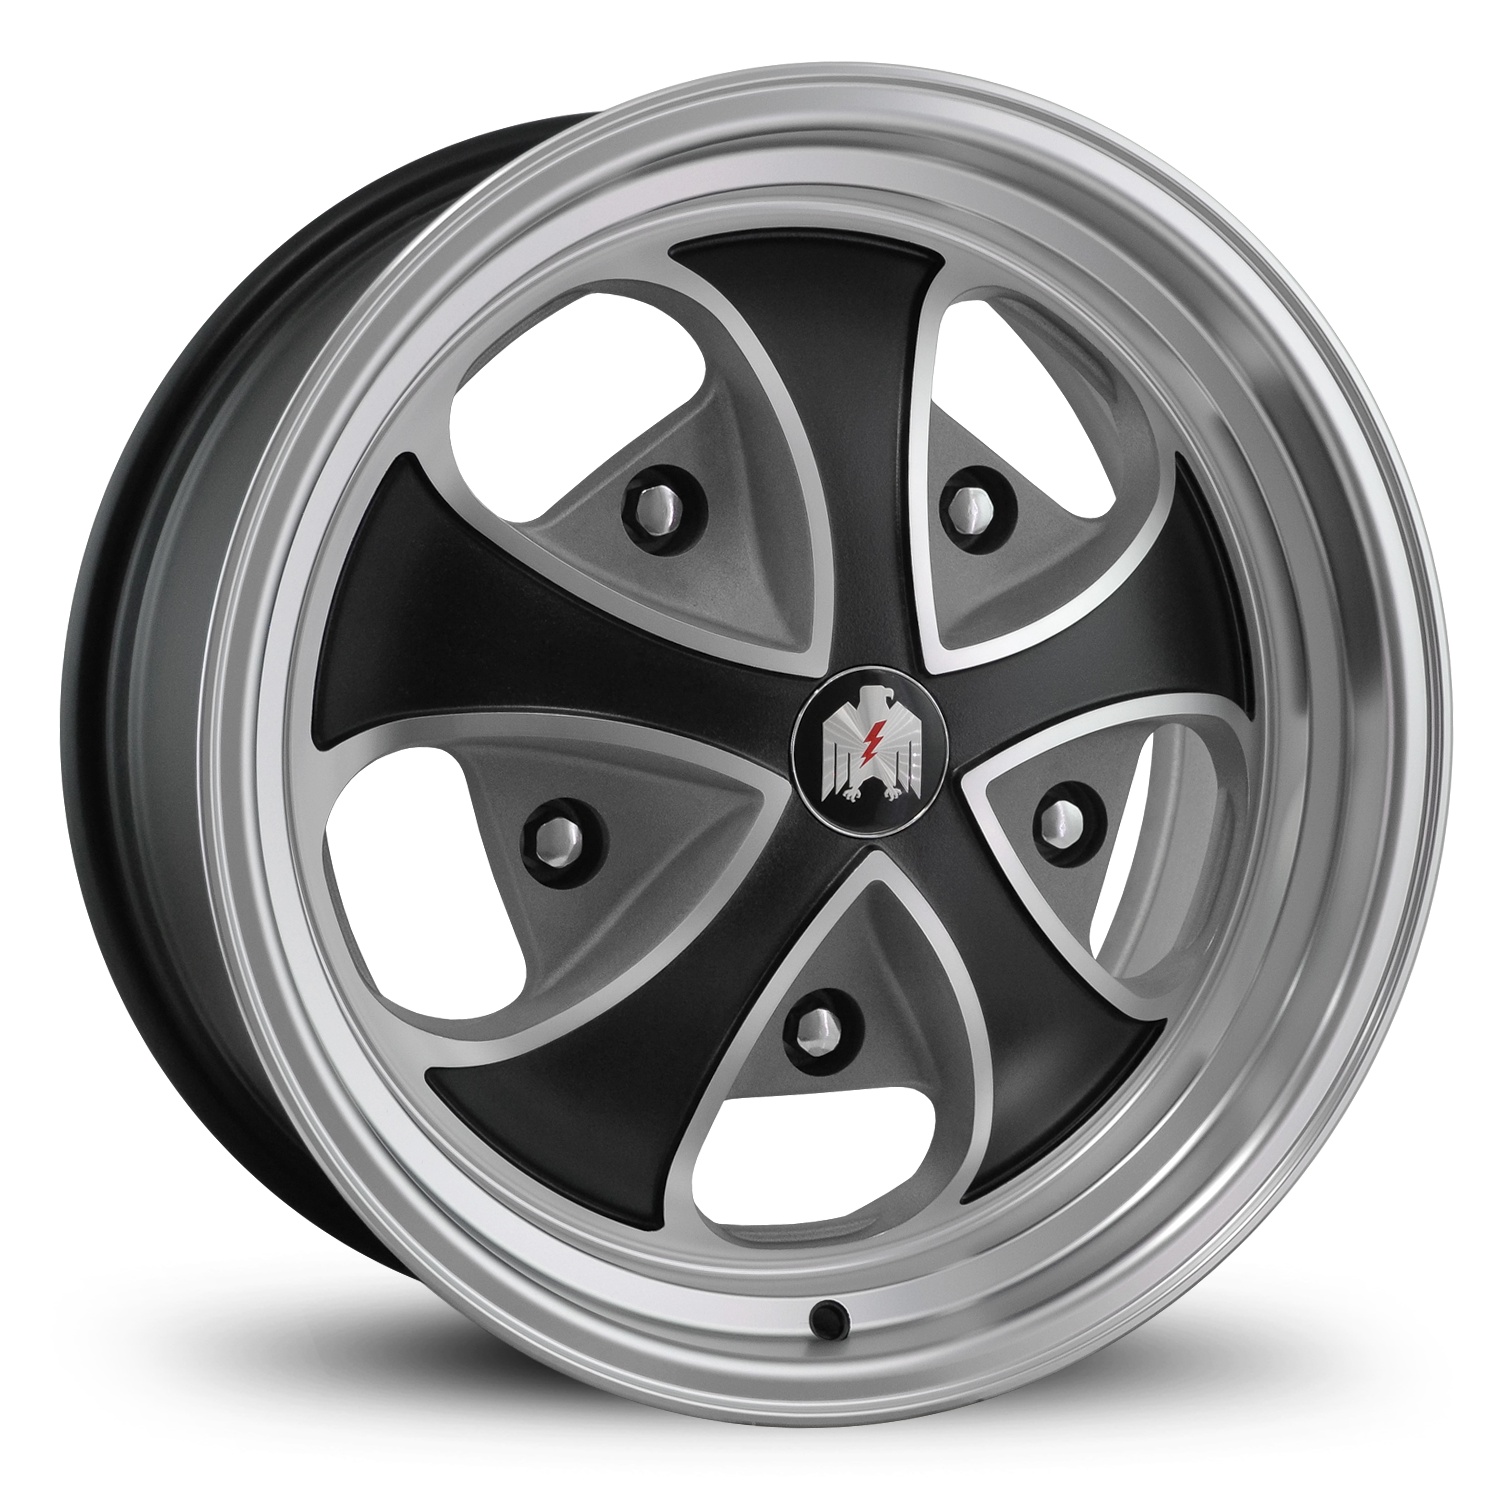 Klassik Rader Classic Car Wheels 15x5.5 | 5x205 | et20mm | 4.1 in | 153.6mm Klassik Rader Falcon Wheels | Satin Black w Raw Windows